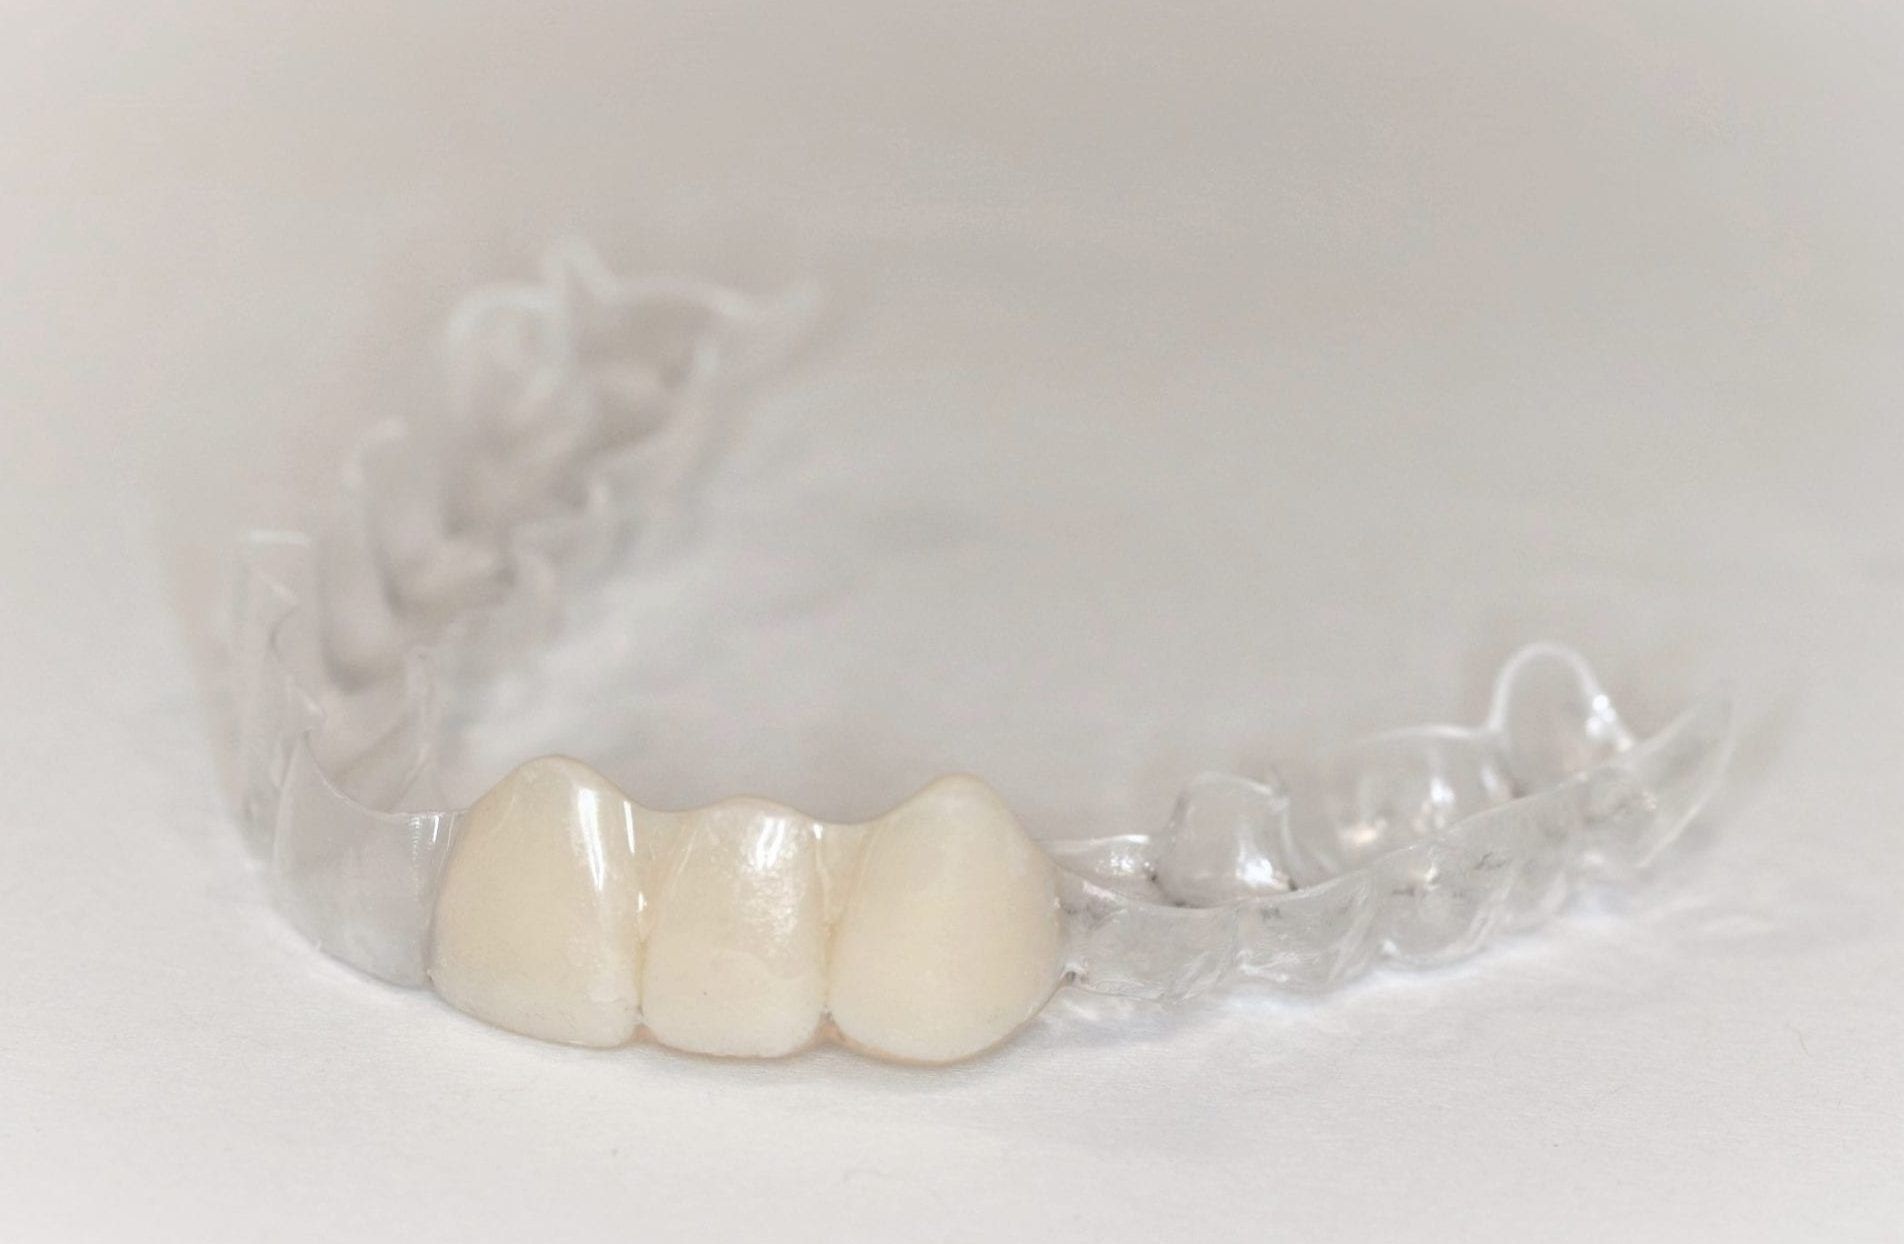 Essix retainer for missing teeth